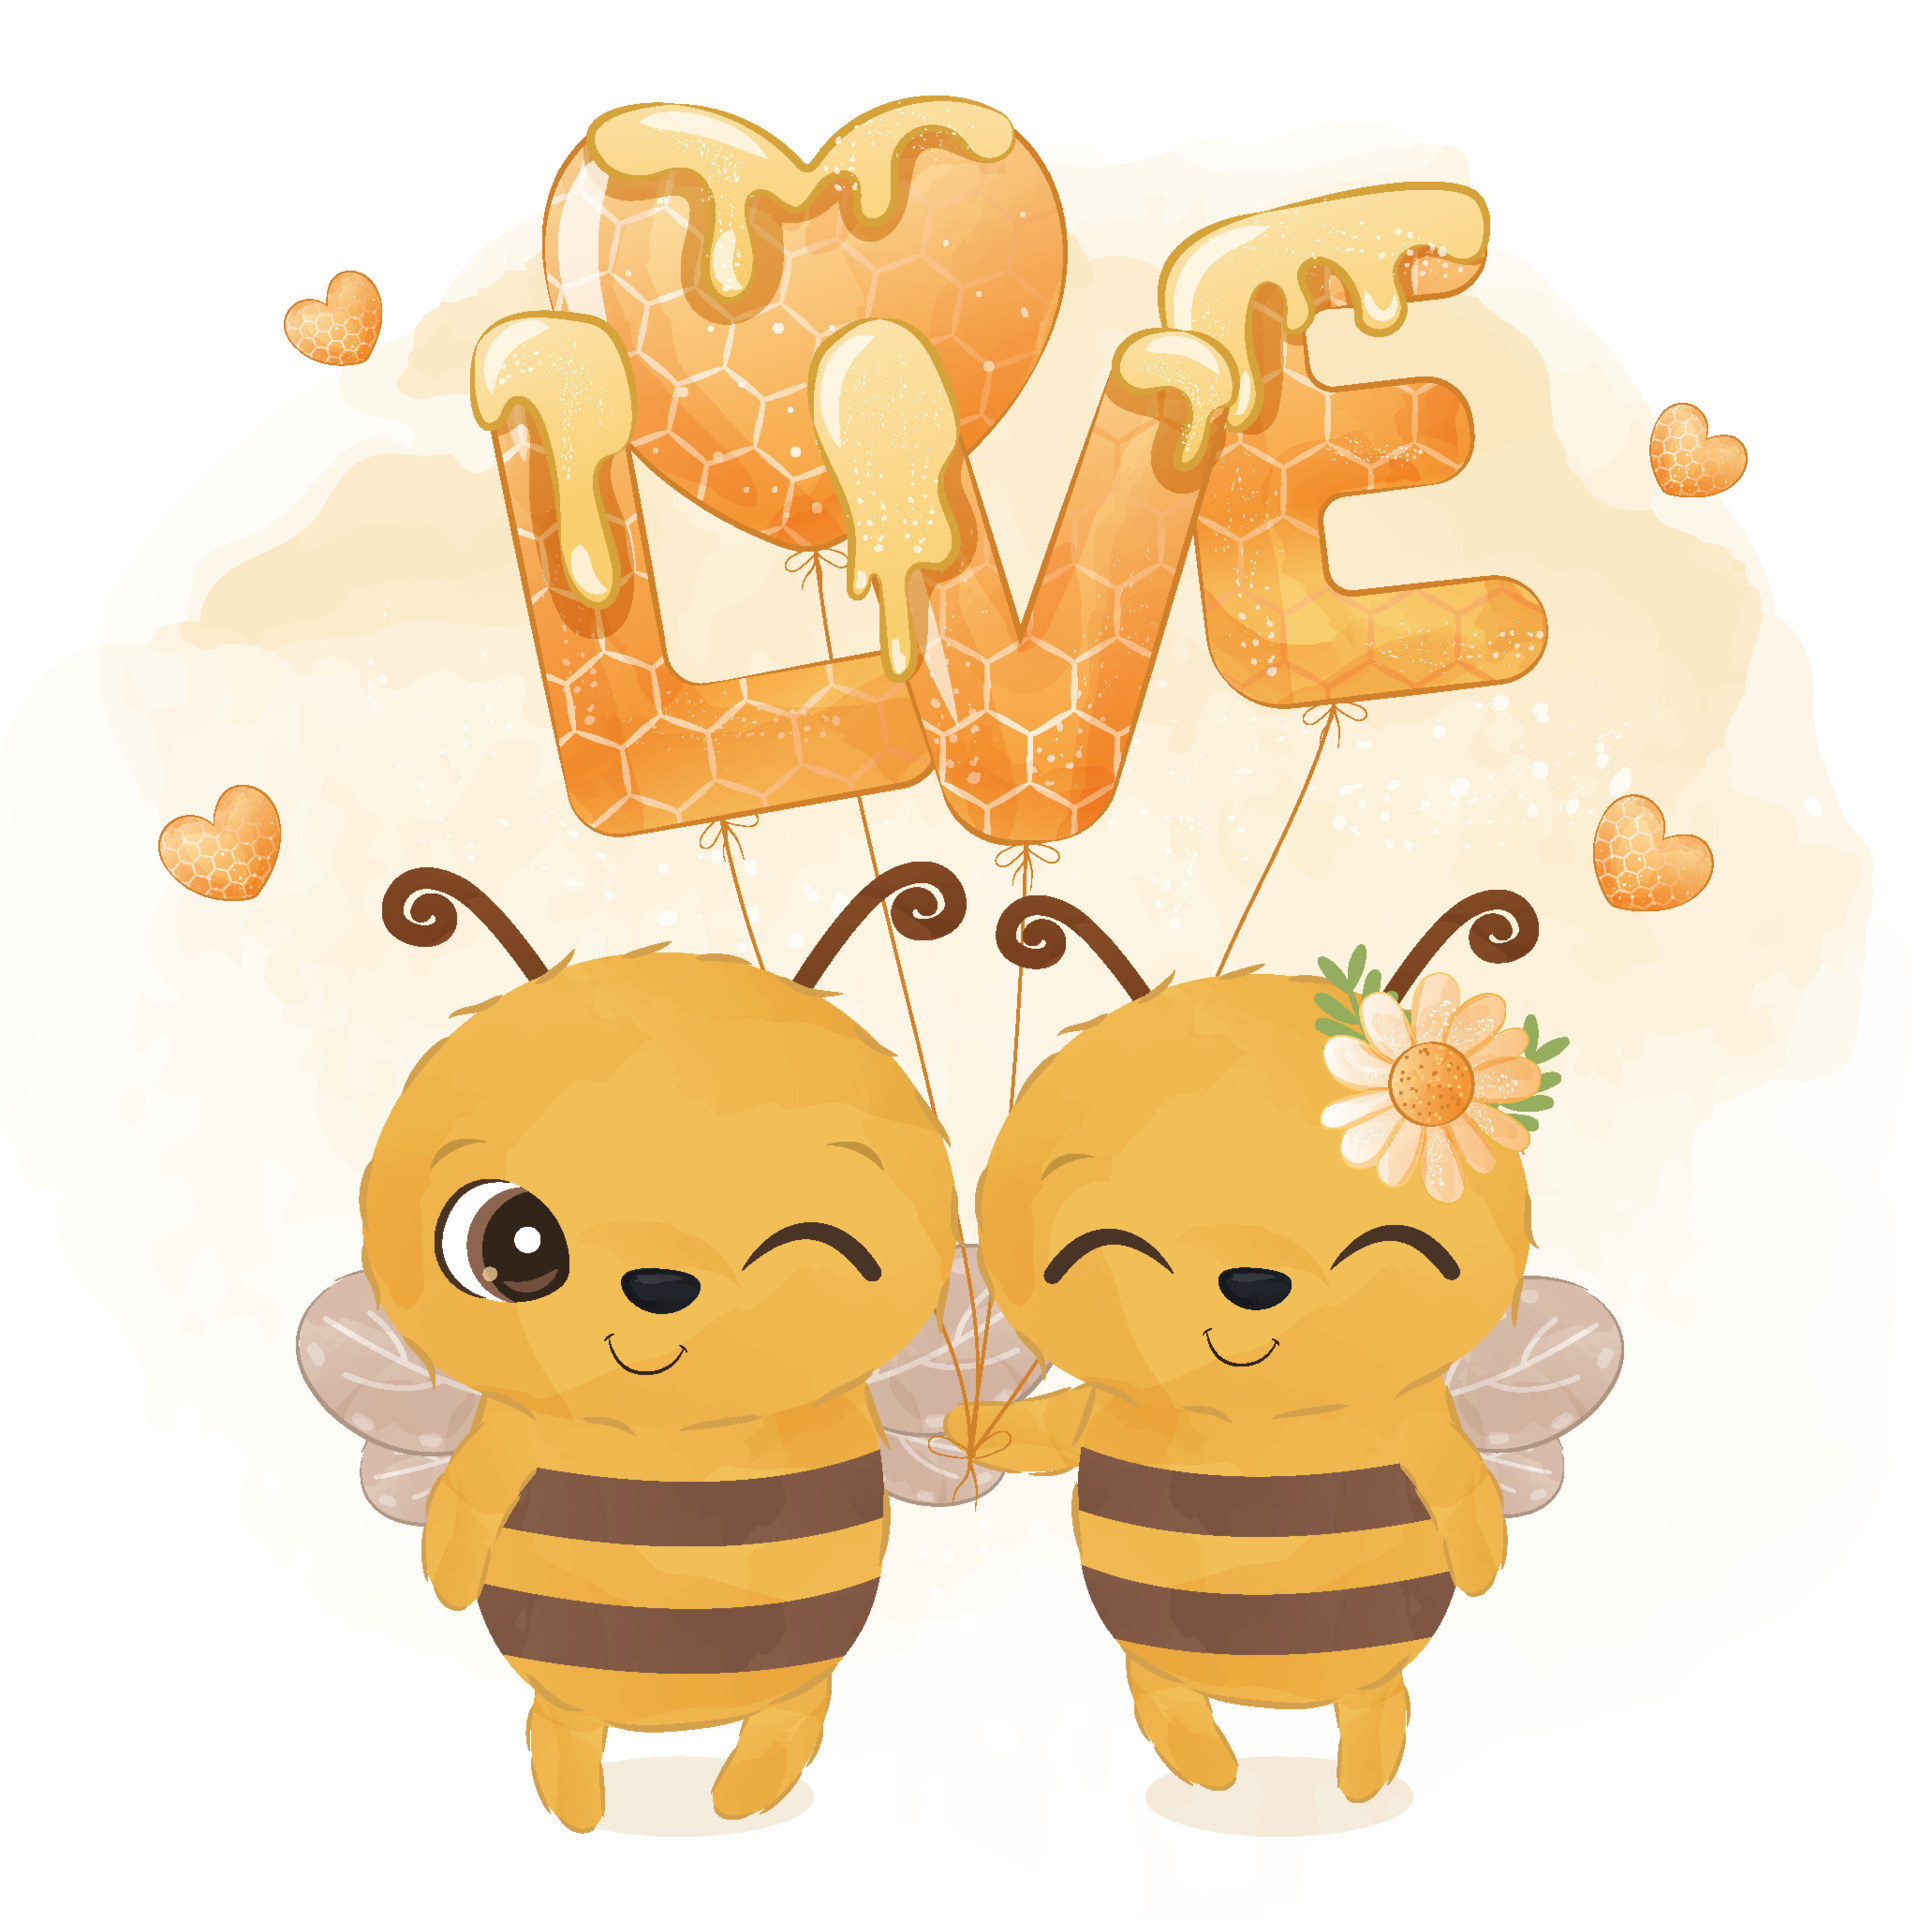 https://static.vecteezy.com/system/resources/previews/005/725/904/original/lovely-honey-bee-illustration-for-spring-decoration-vector.jpg